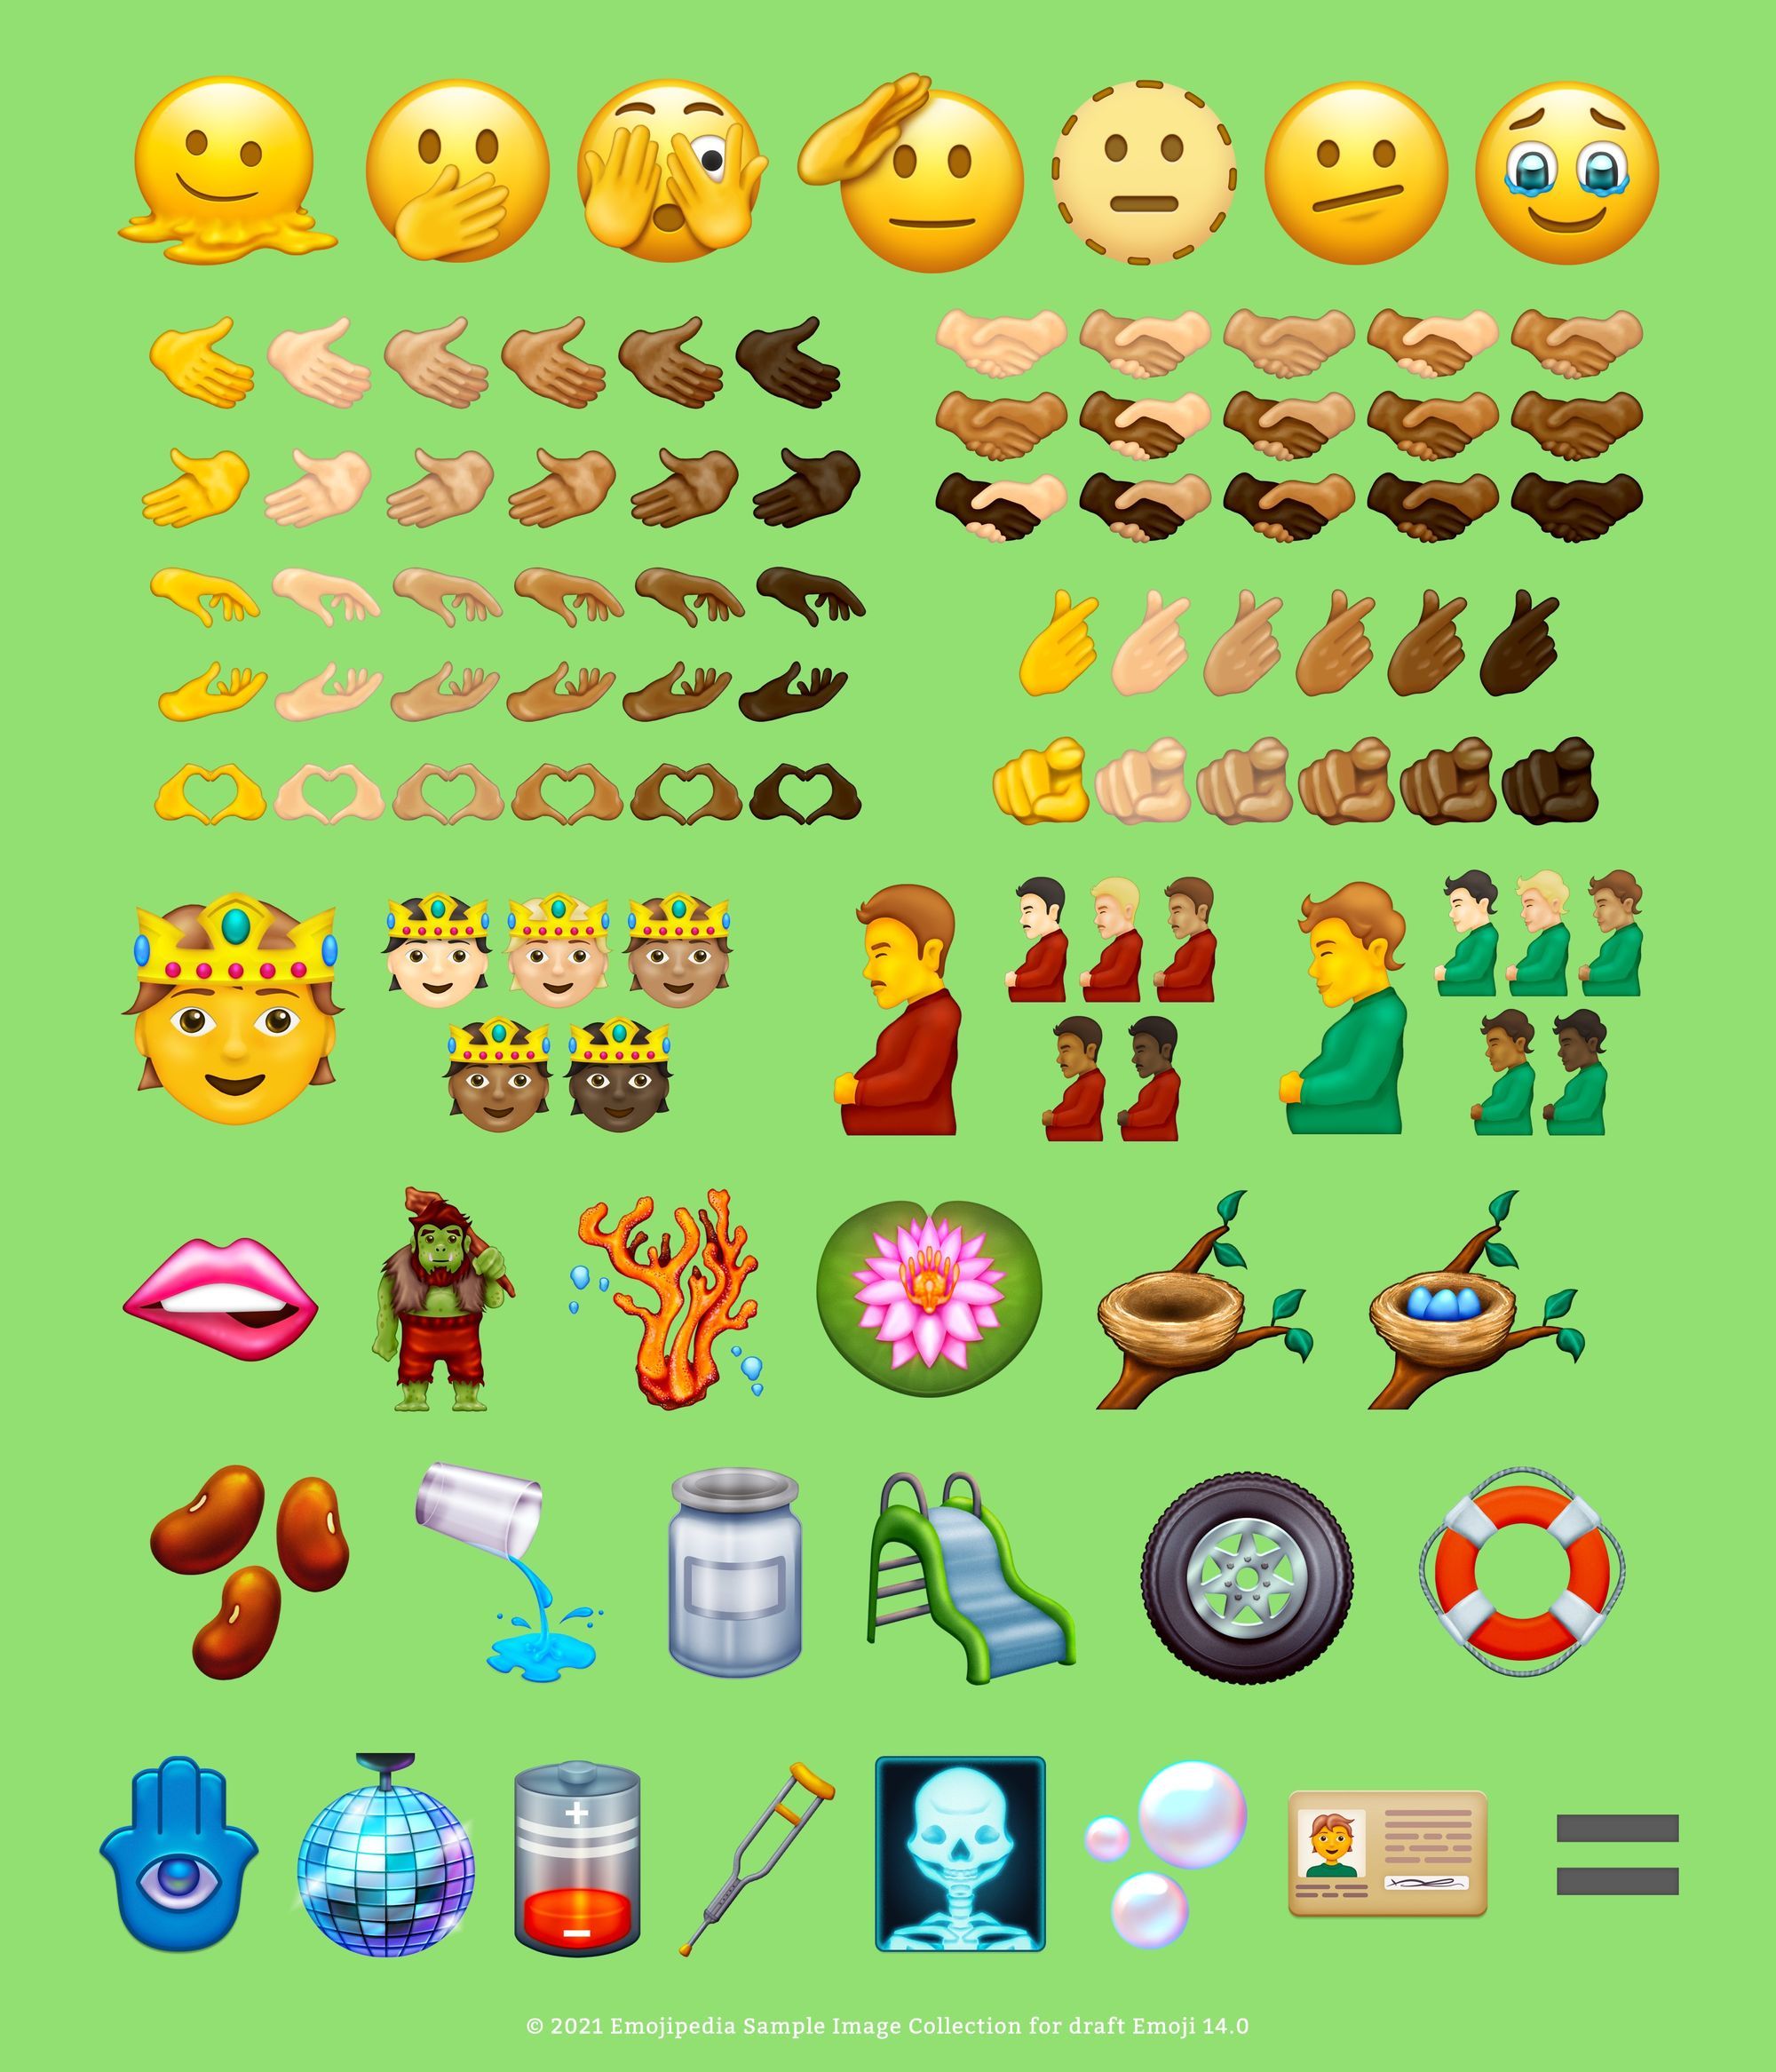 New Emojis in 20212022